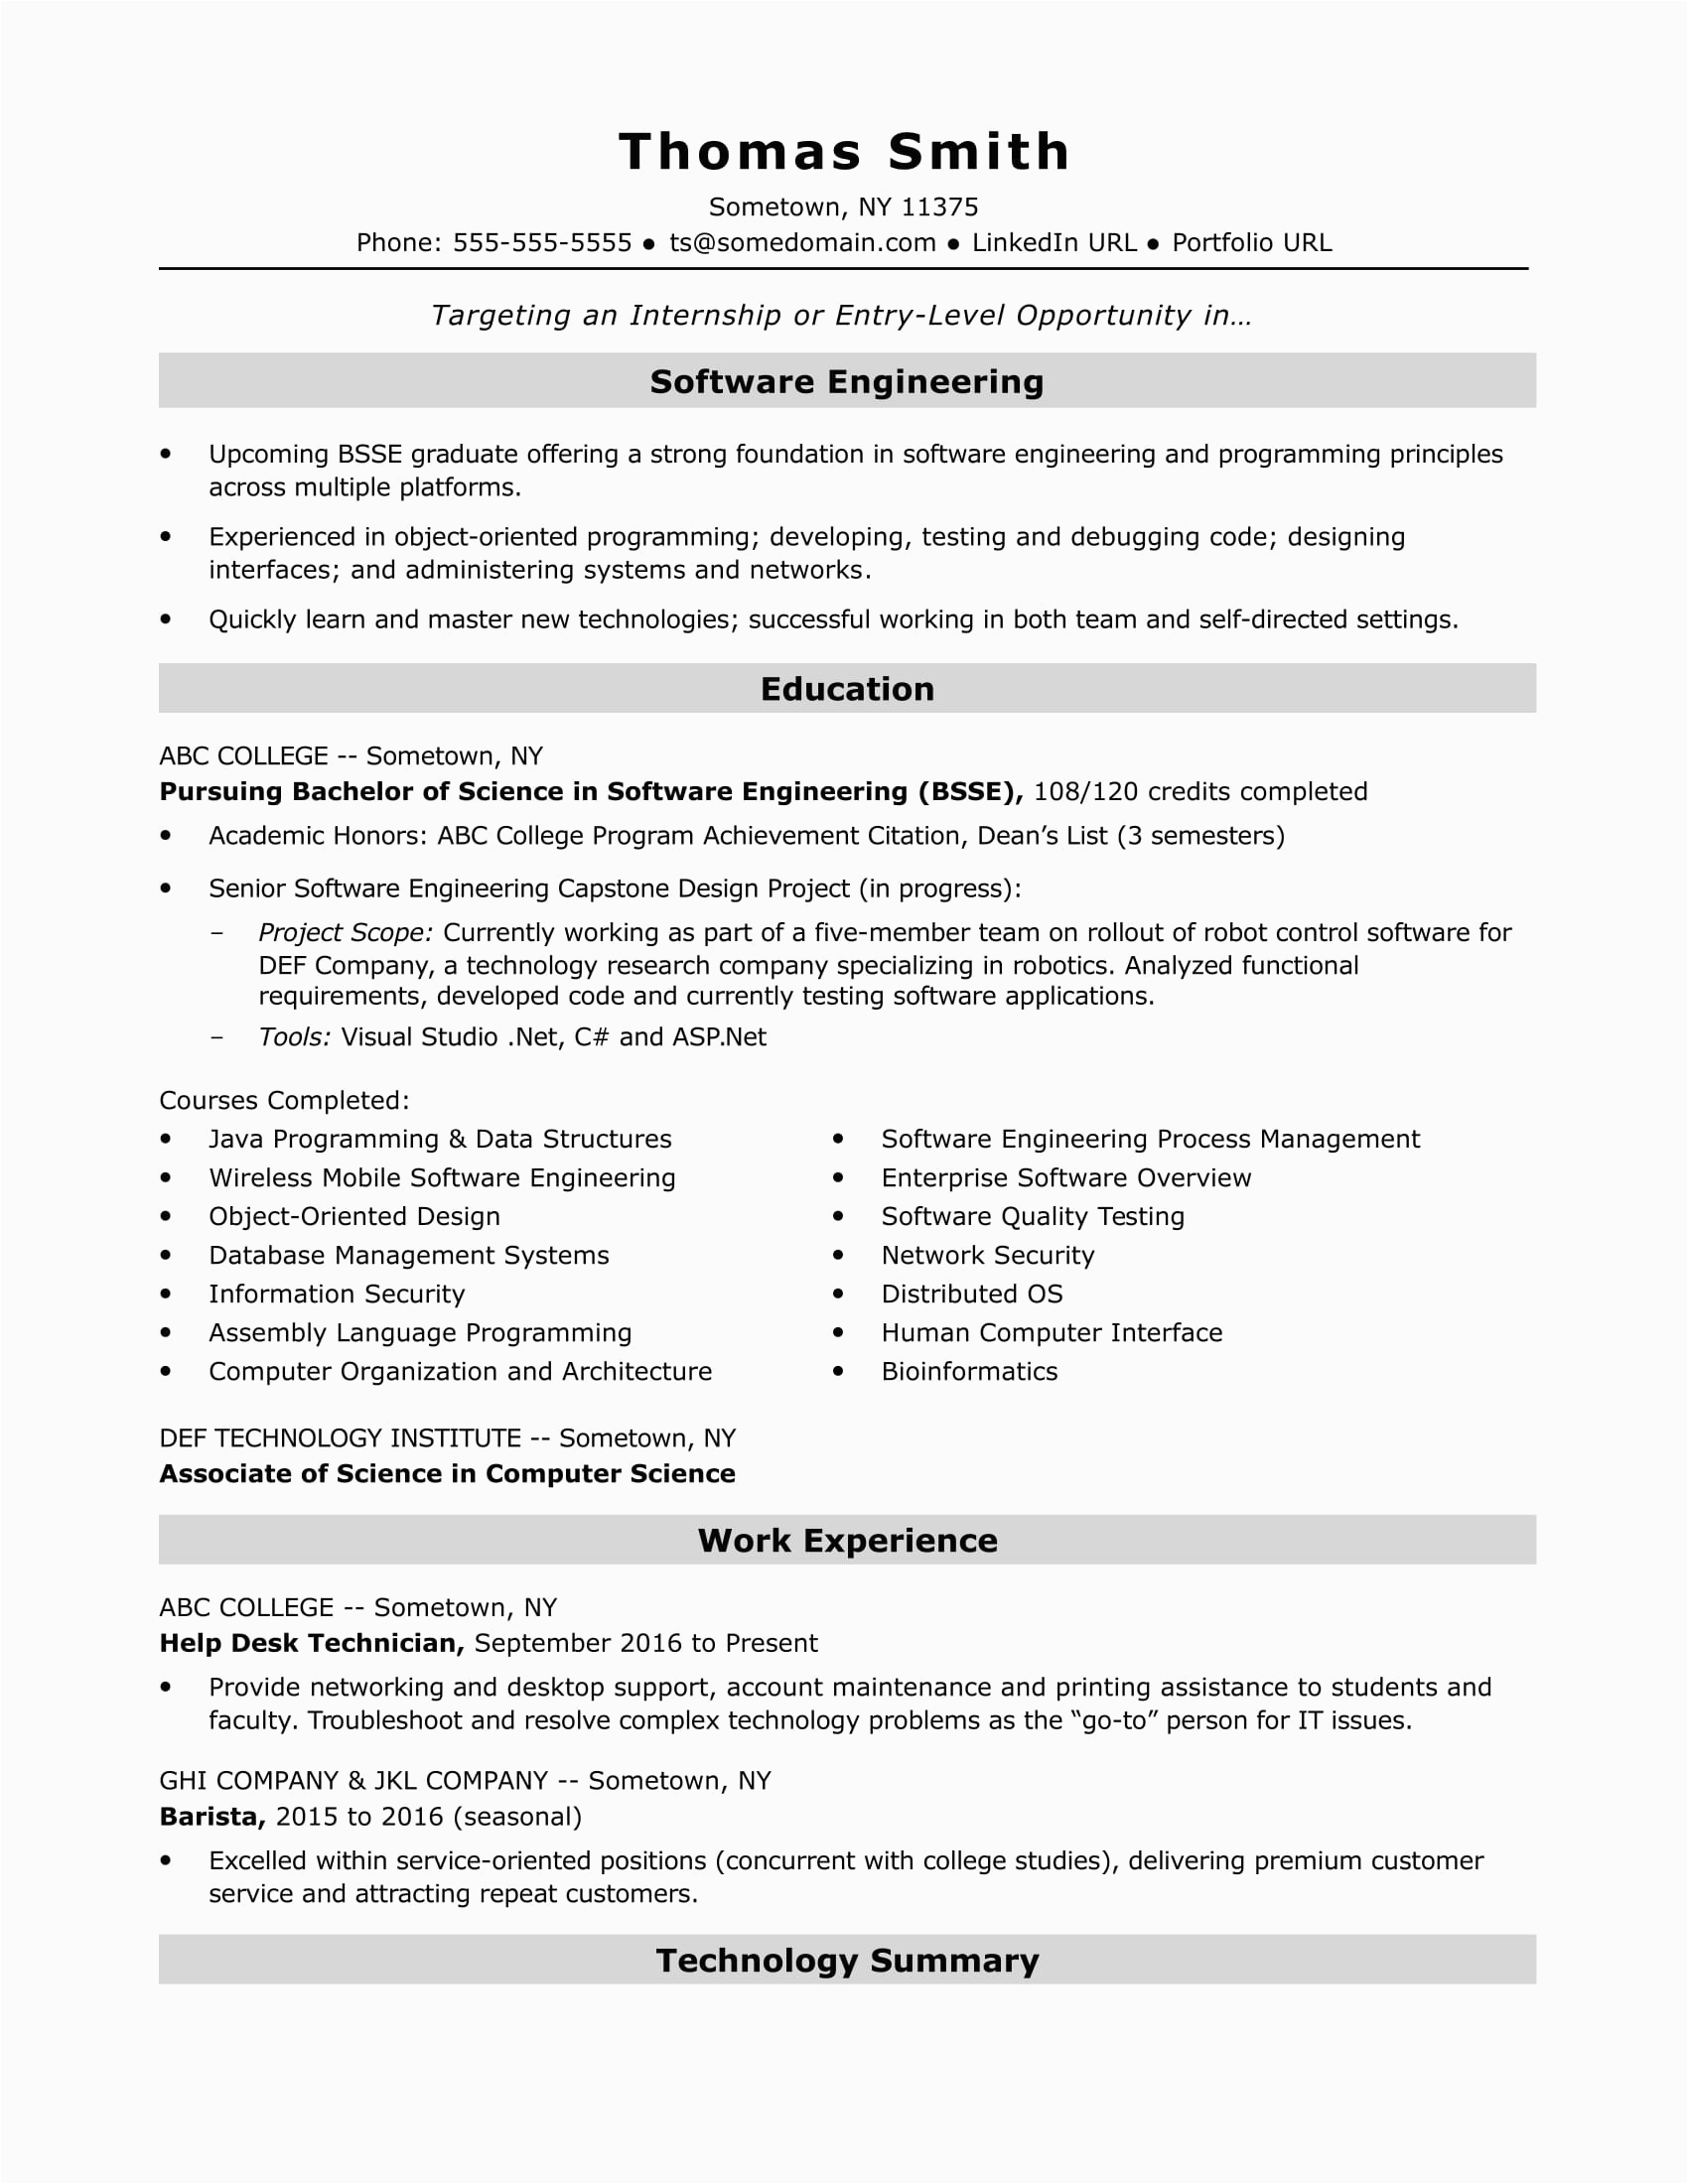 Software Engineer Entry Level Resume Sample Entry Level software Engineer Resume Sample